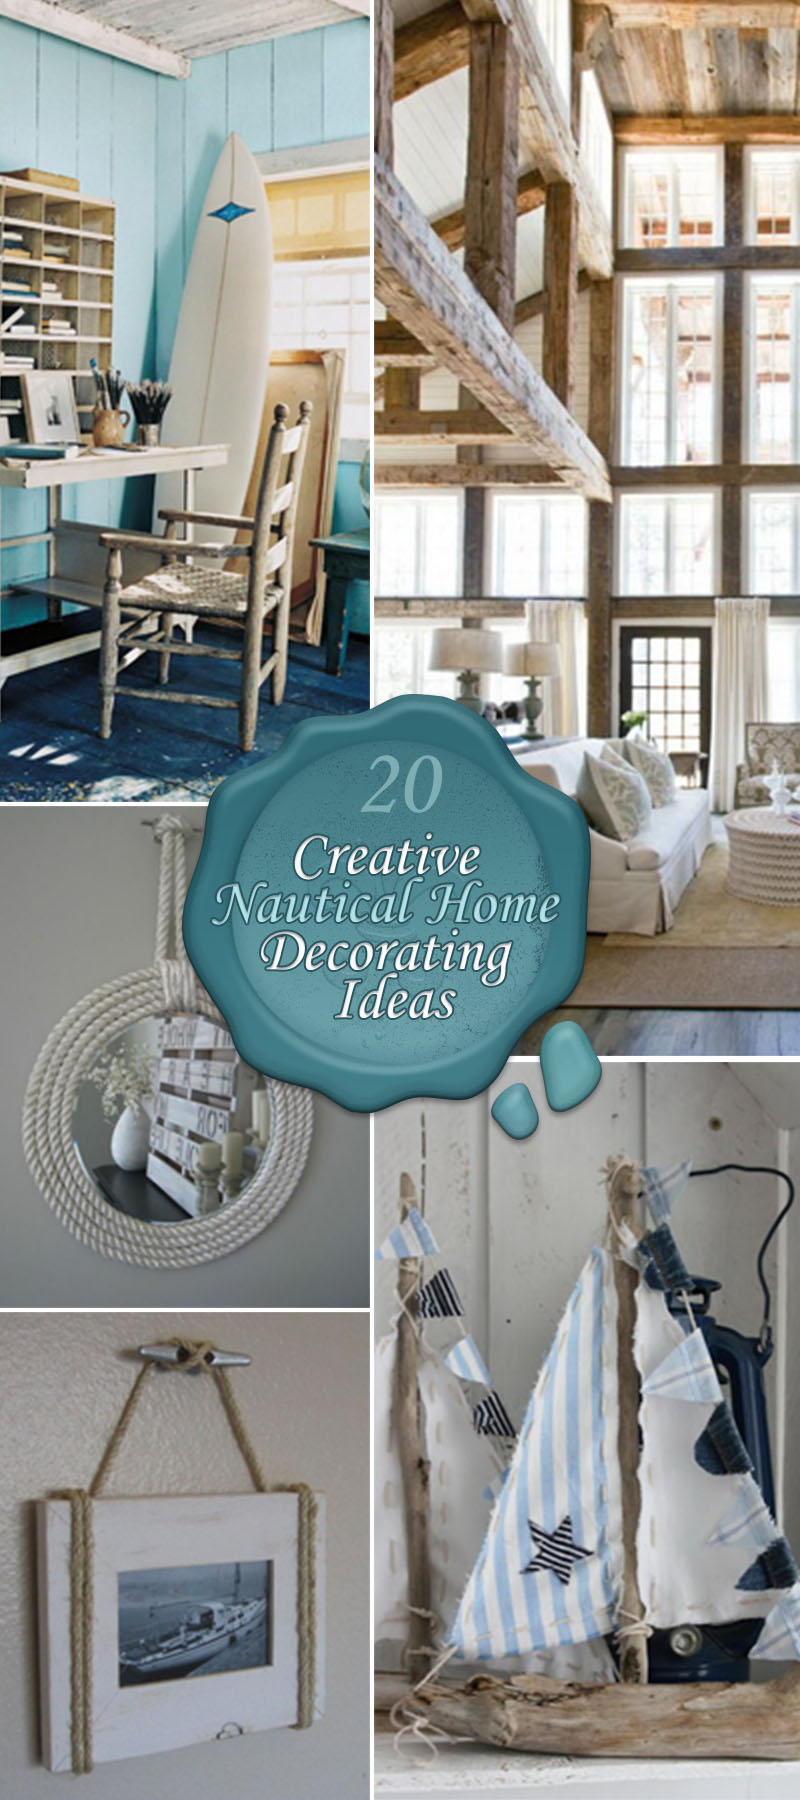 Creative Nautical Home Decorating Ideas!